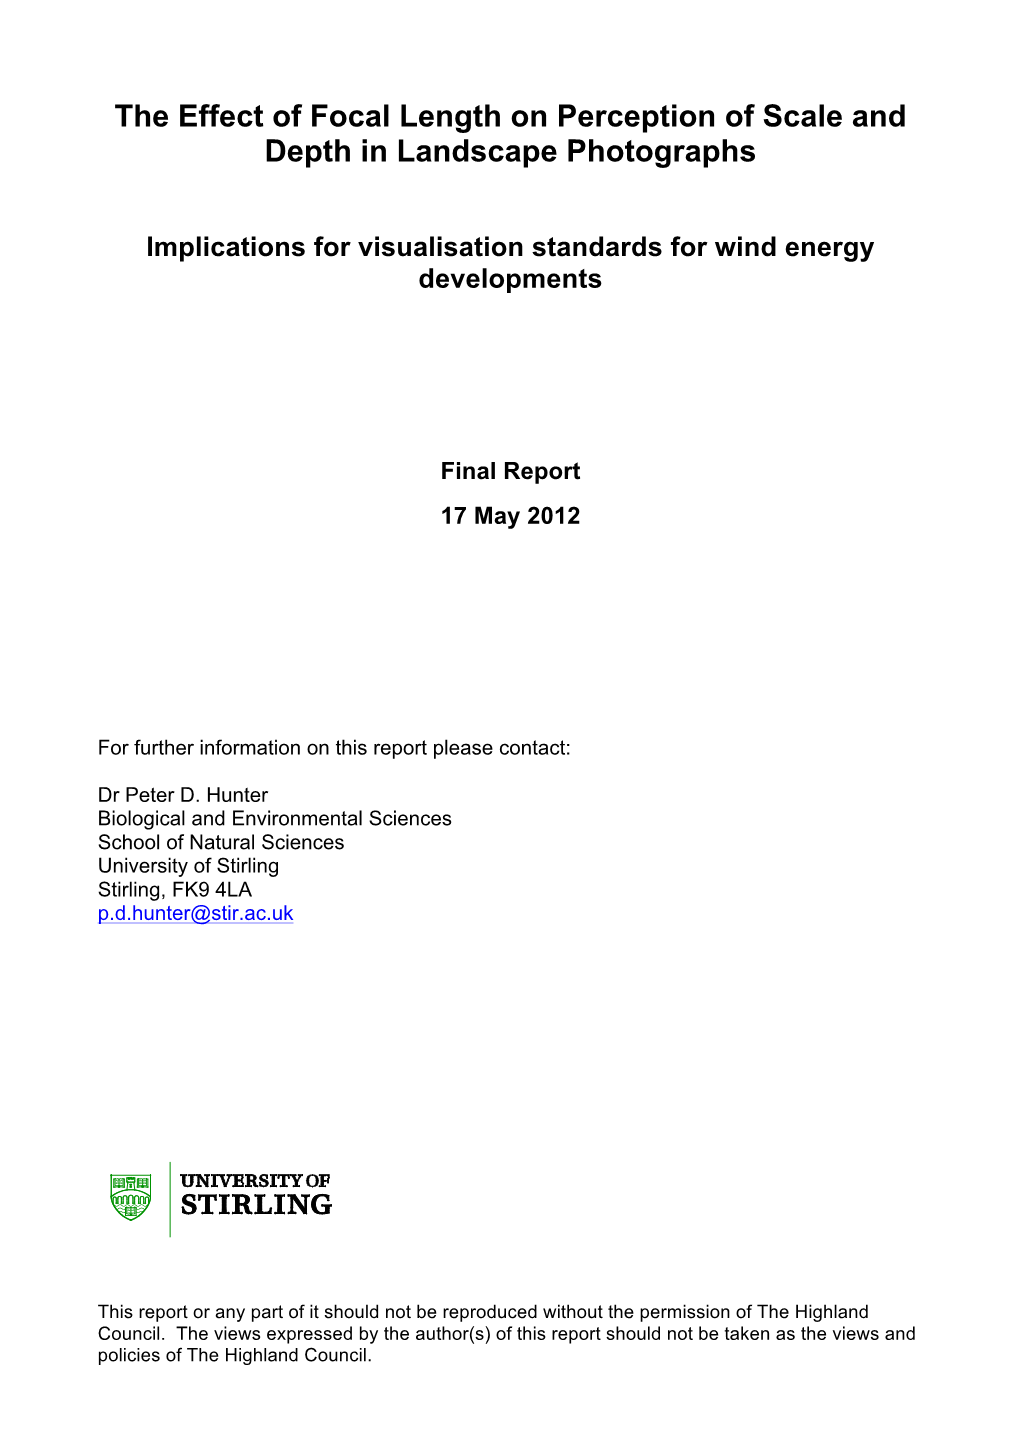 University of Stirling Study of Visualisation